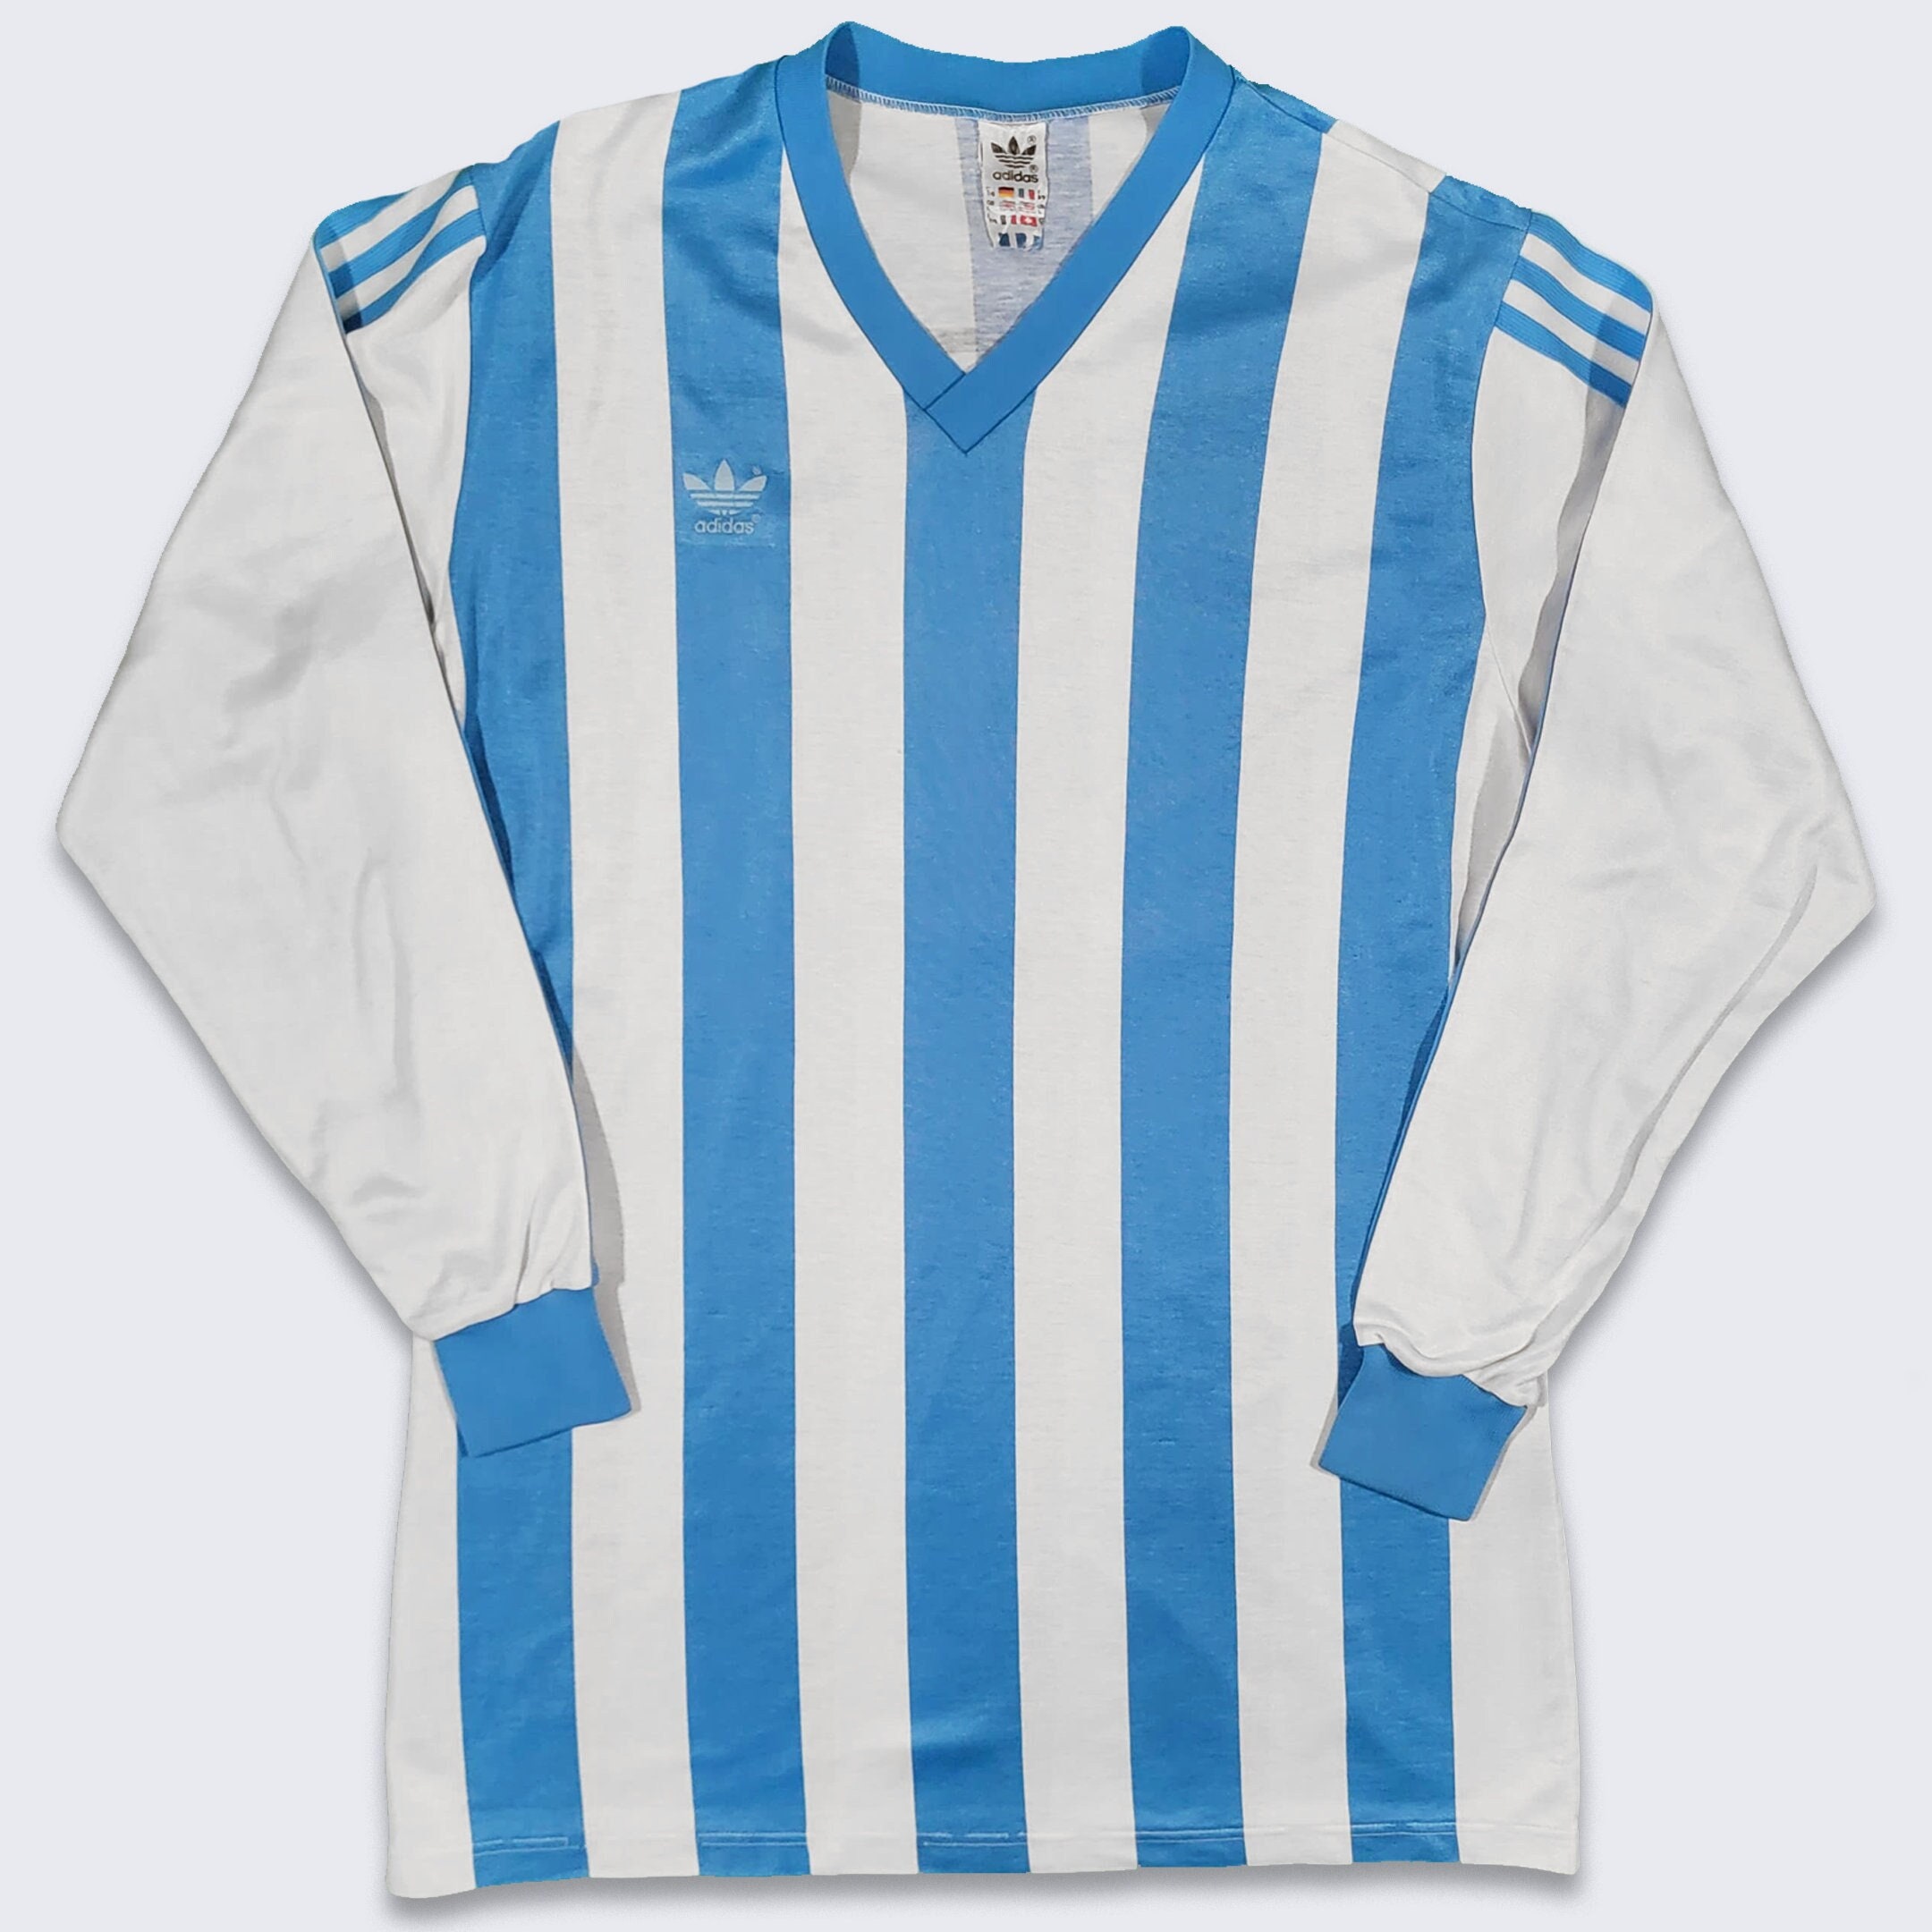 Real Madrid Retro Replicas football shirt 1981 - 1986.